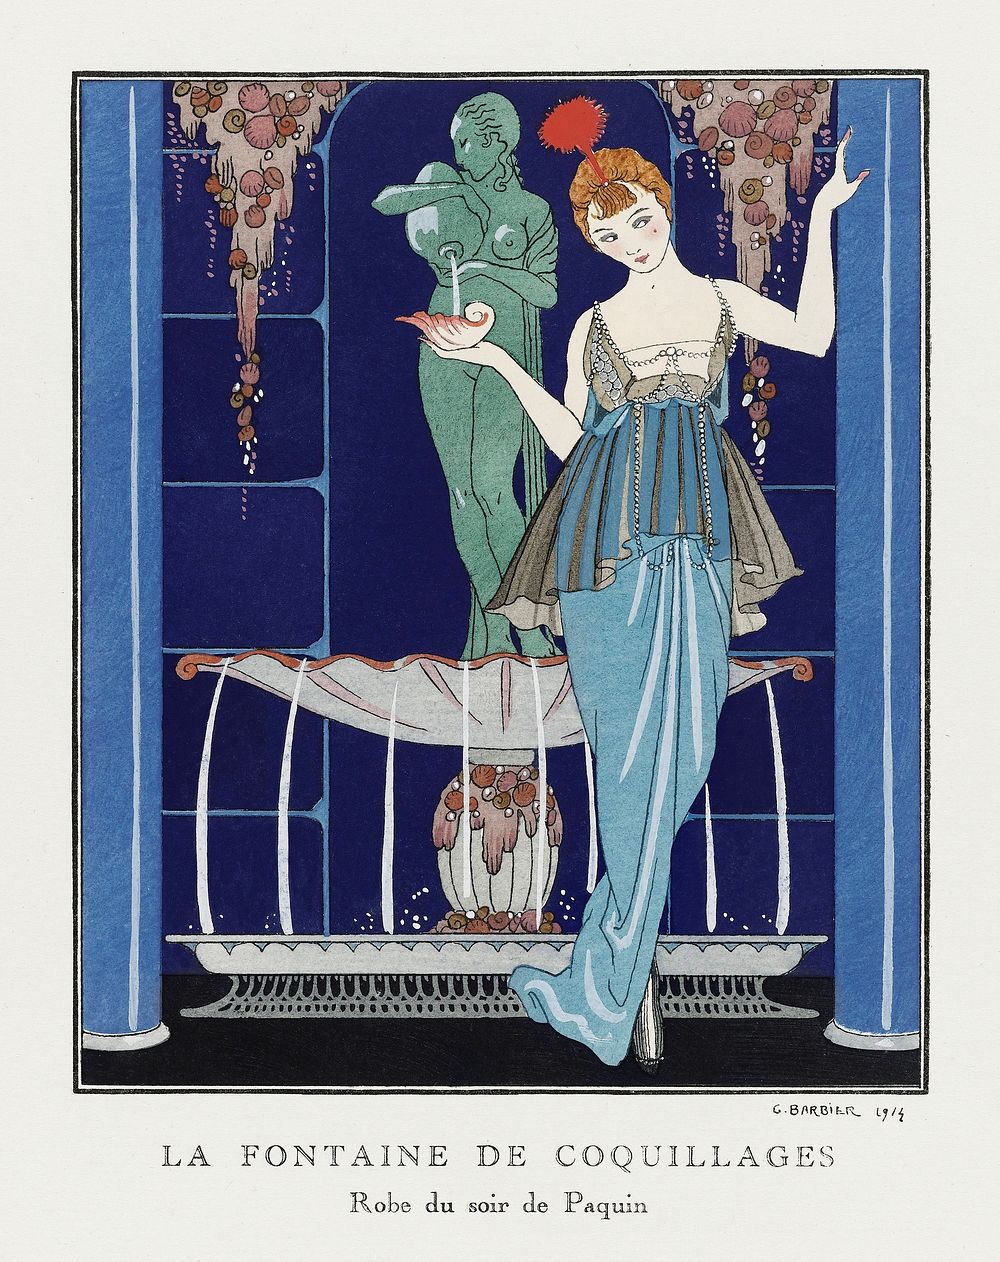 La Fontaine de coquillages: Robe du soir de Paquin (1914) fashion illustration in high resolution by George Barbier.…